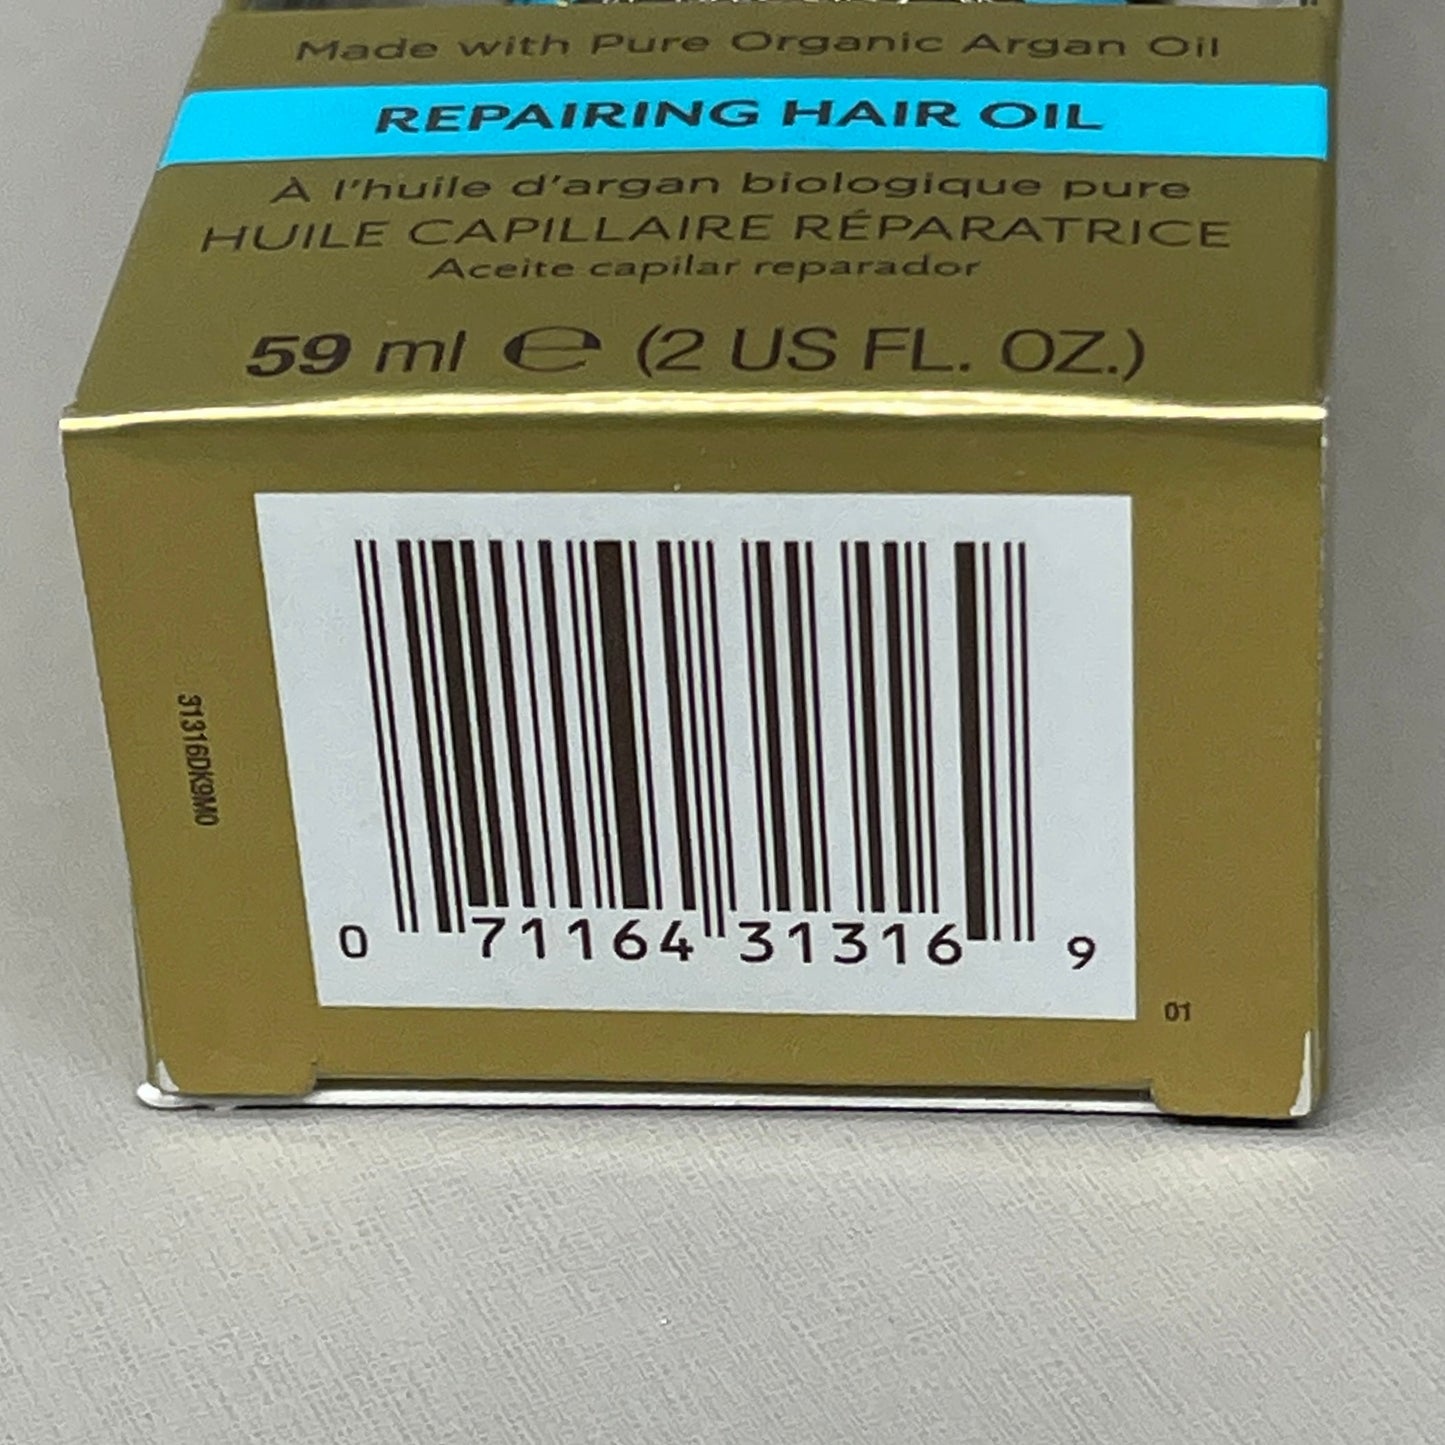 HASK Argan Shine Oil 3-PACK from Morocco Repairing Hair Oil 2 oz 31316D(NEW)